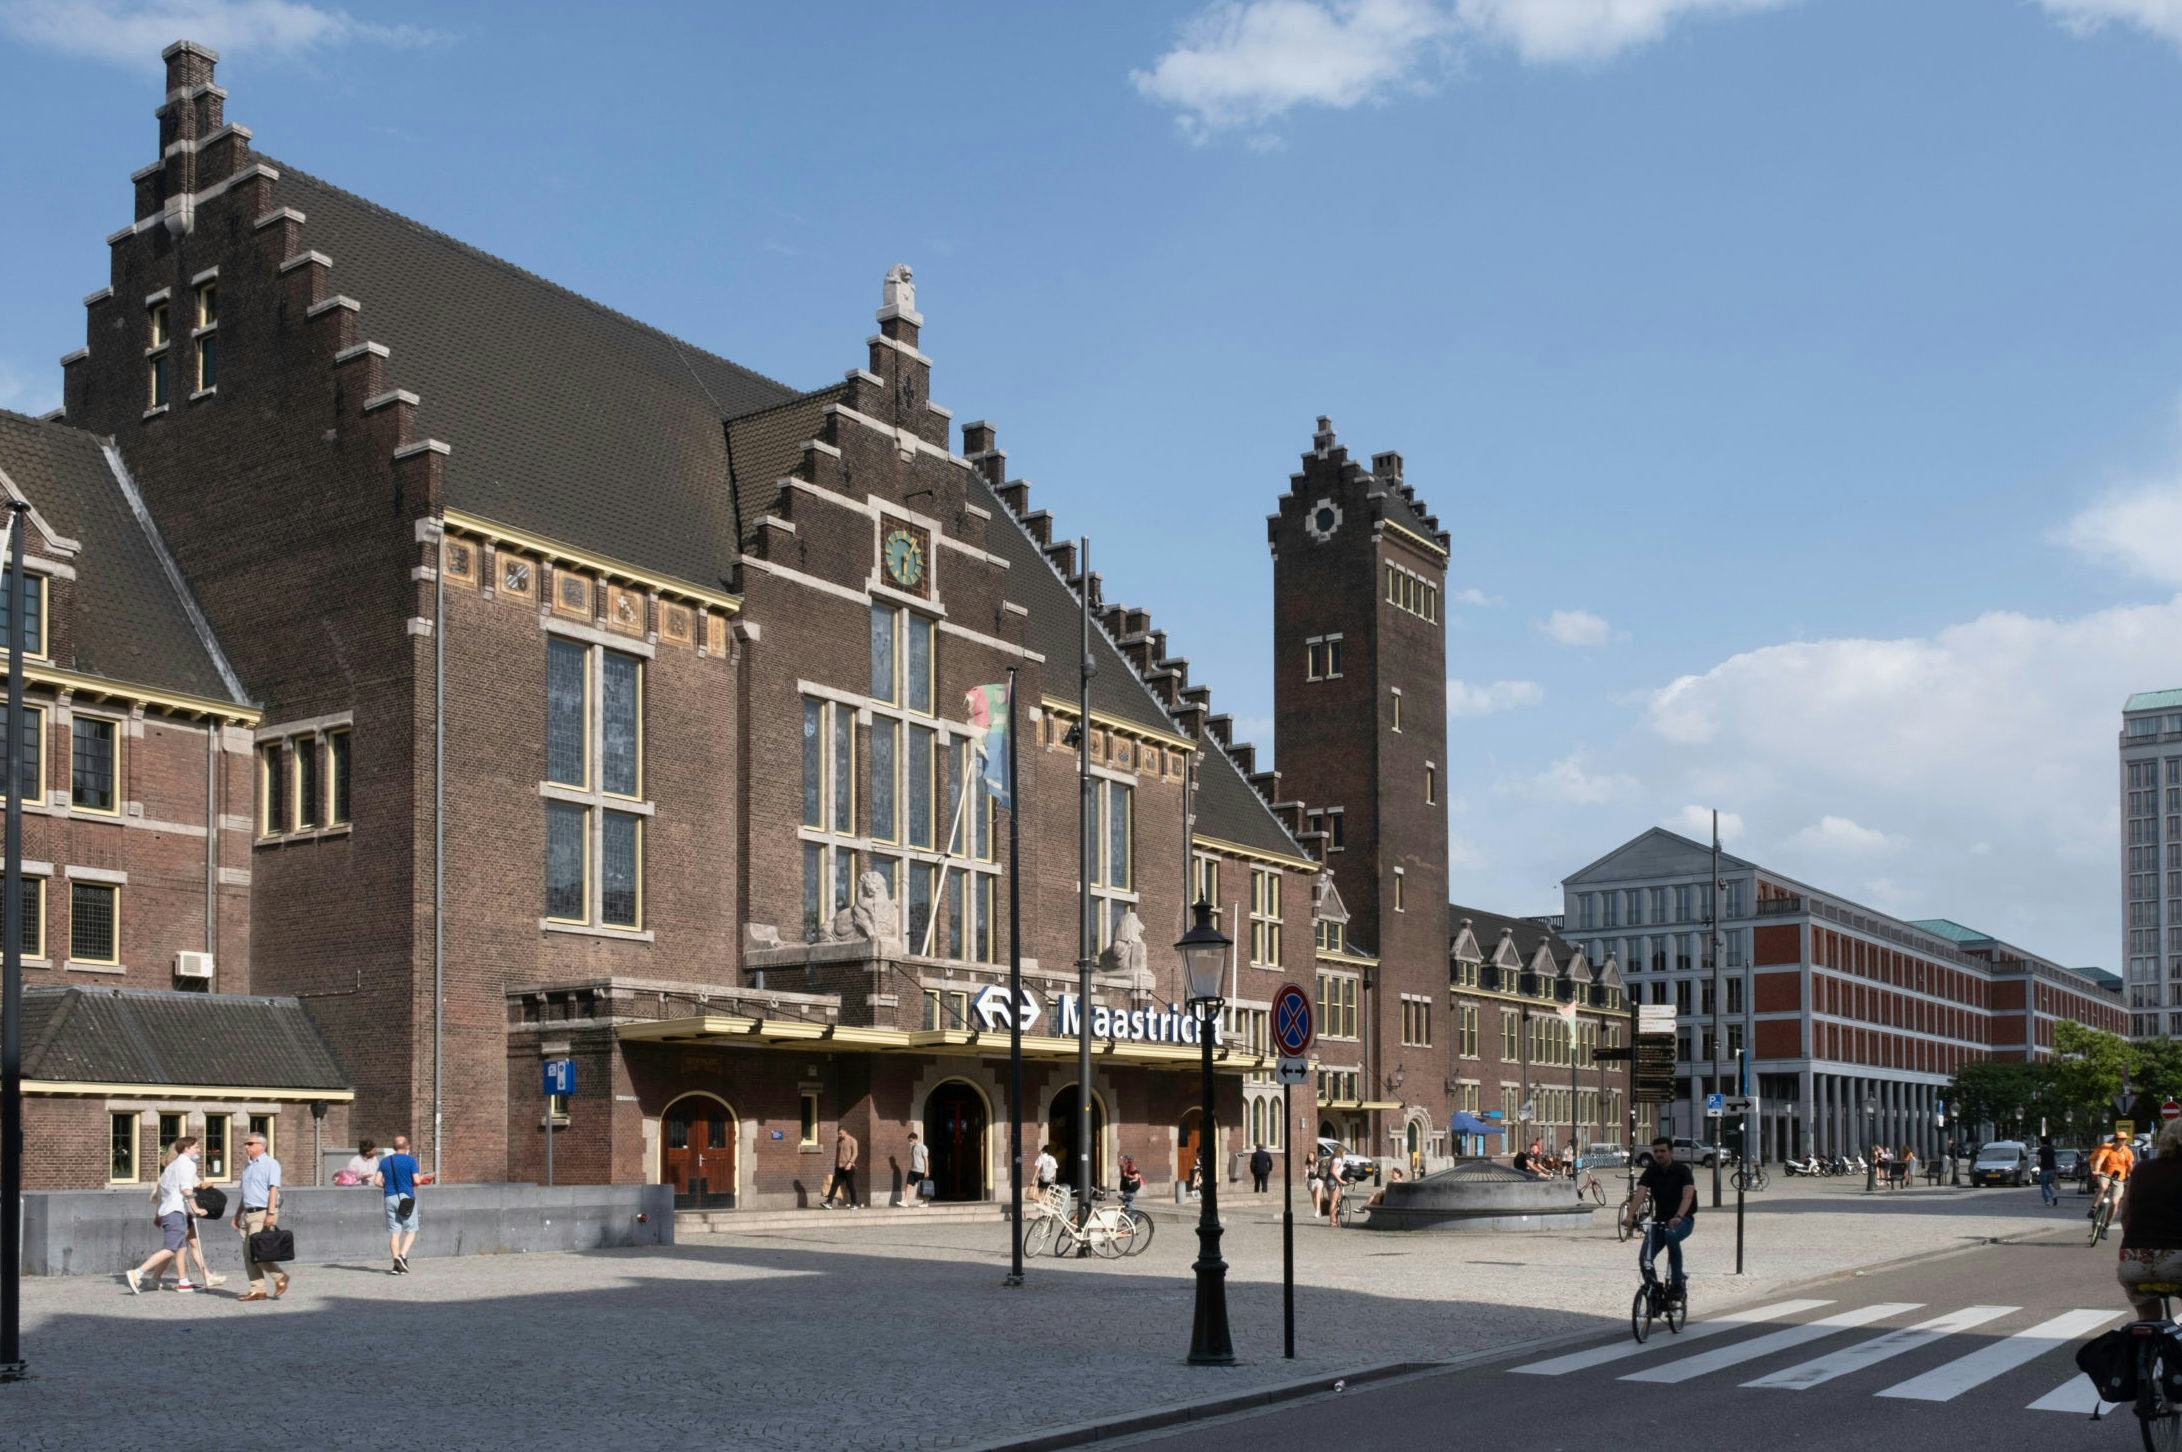 Station Maastricht na 105 jaar alsnog officieel geopend